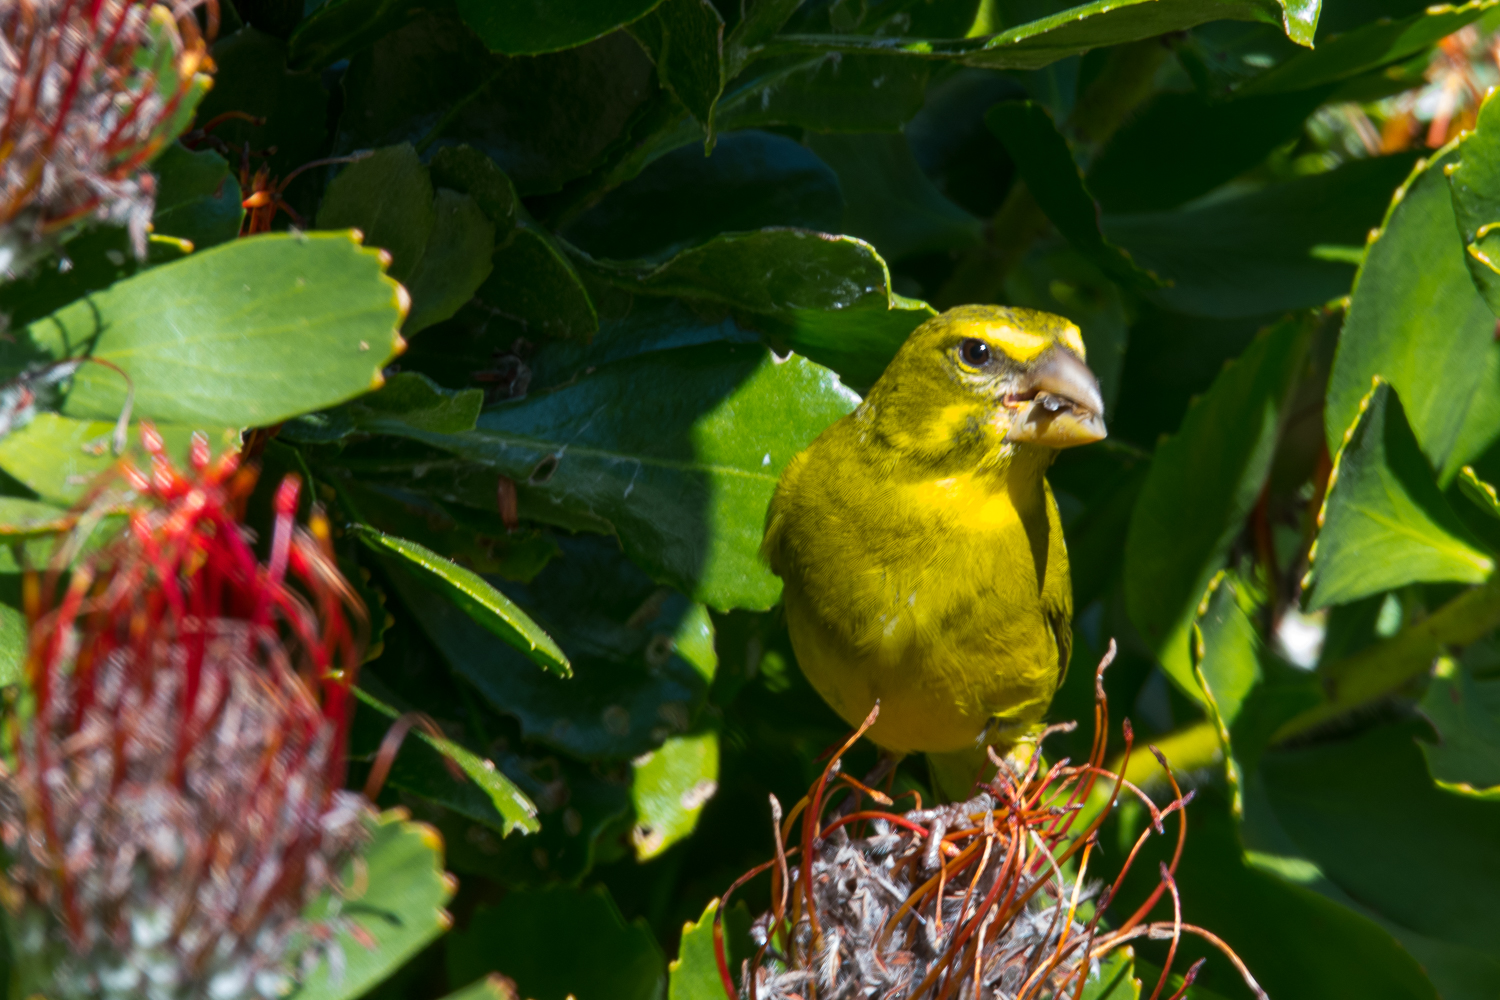 Serin soufré mâle (Brimstone canary, Cithagra sulphuratus) dégustant des graines de protea, Kirstenbosch Botanical gardens.